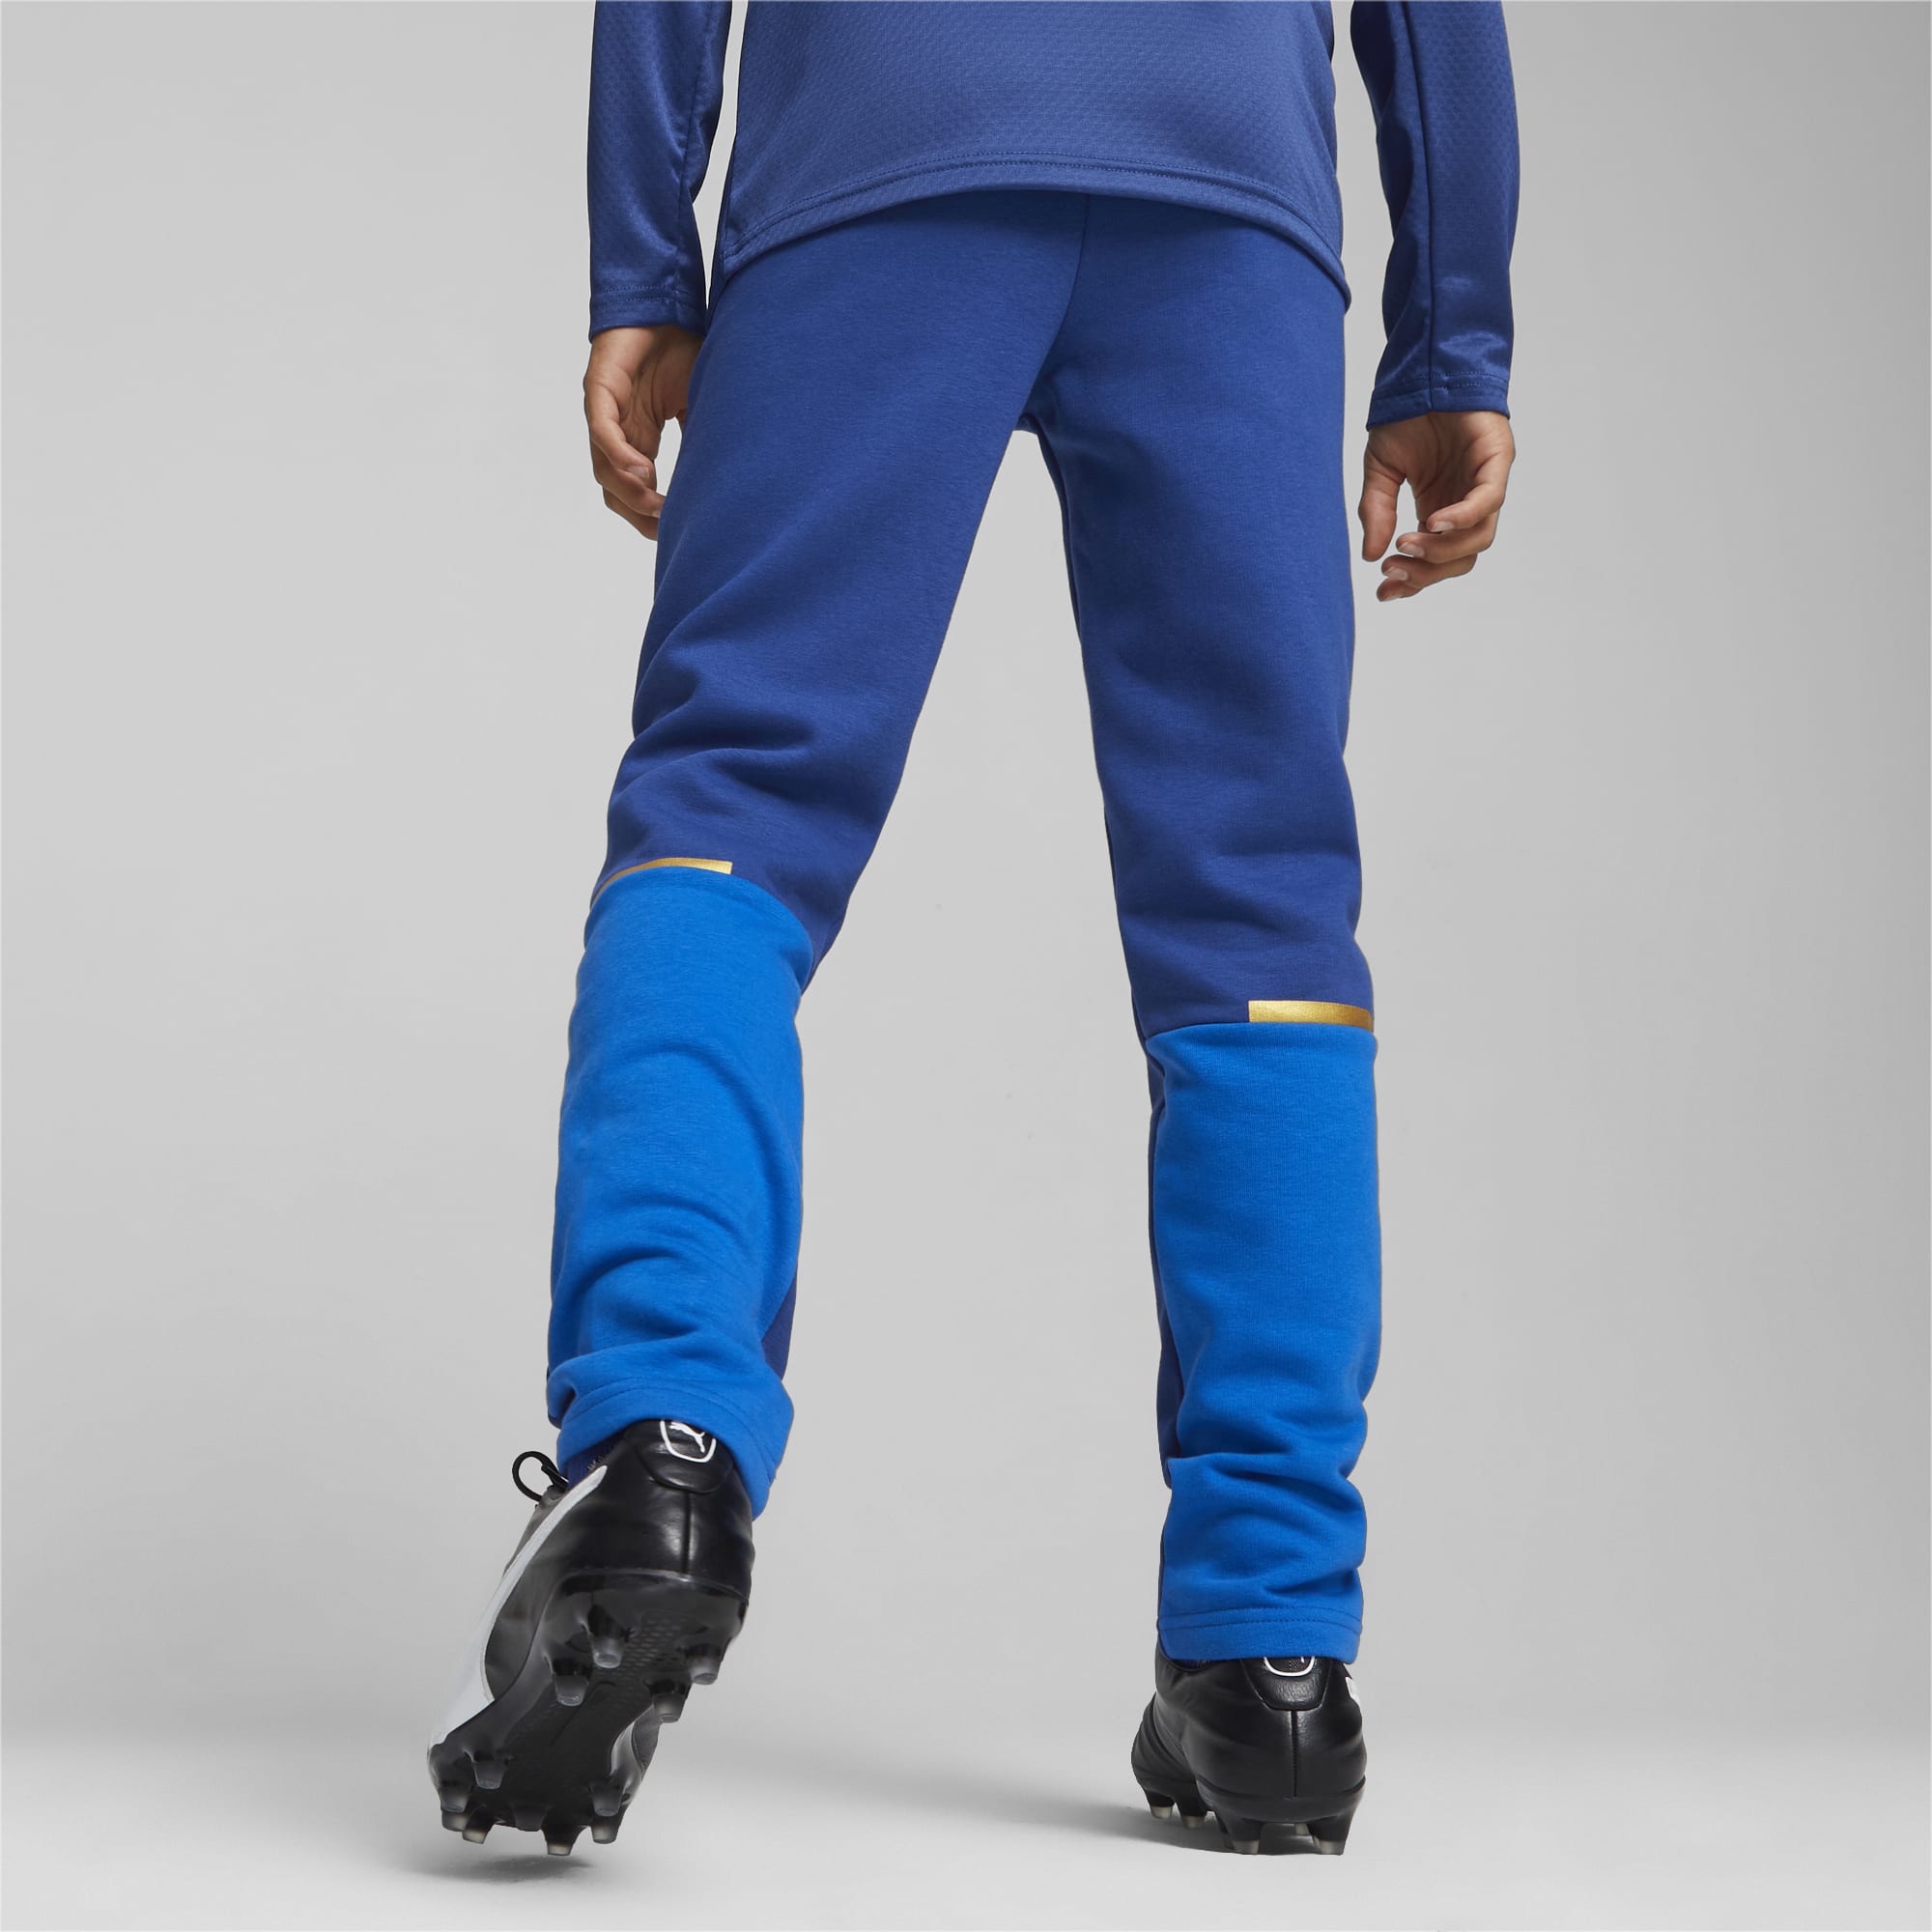 PUMA Olympique De Marseille Football Casuals Youth Sweatpants, Royal Blue